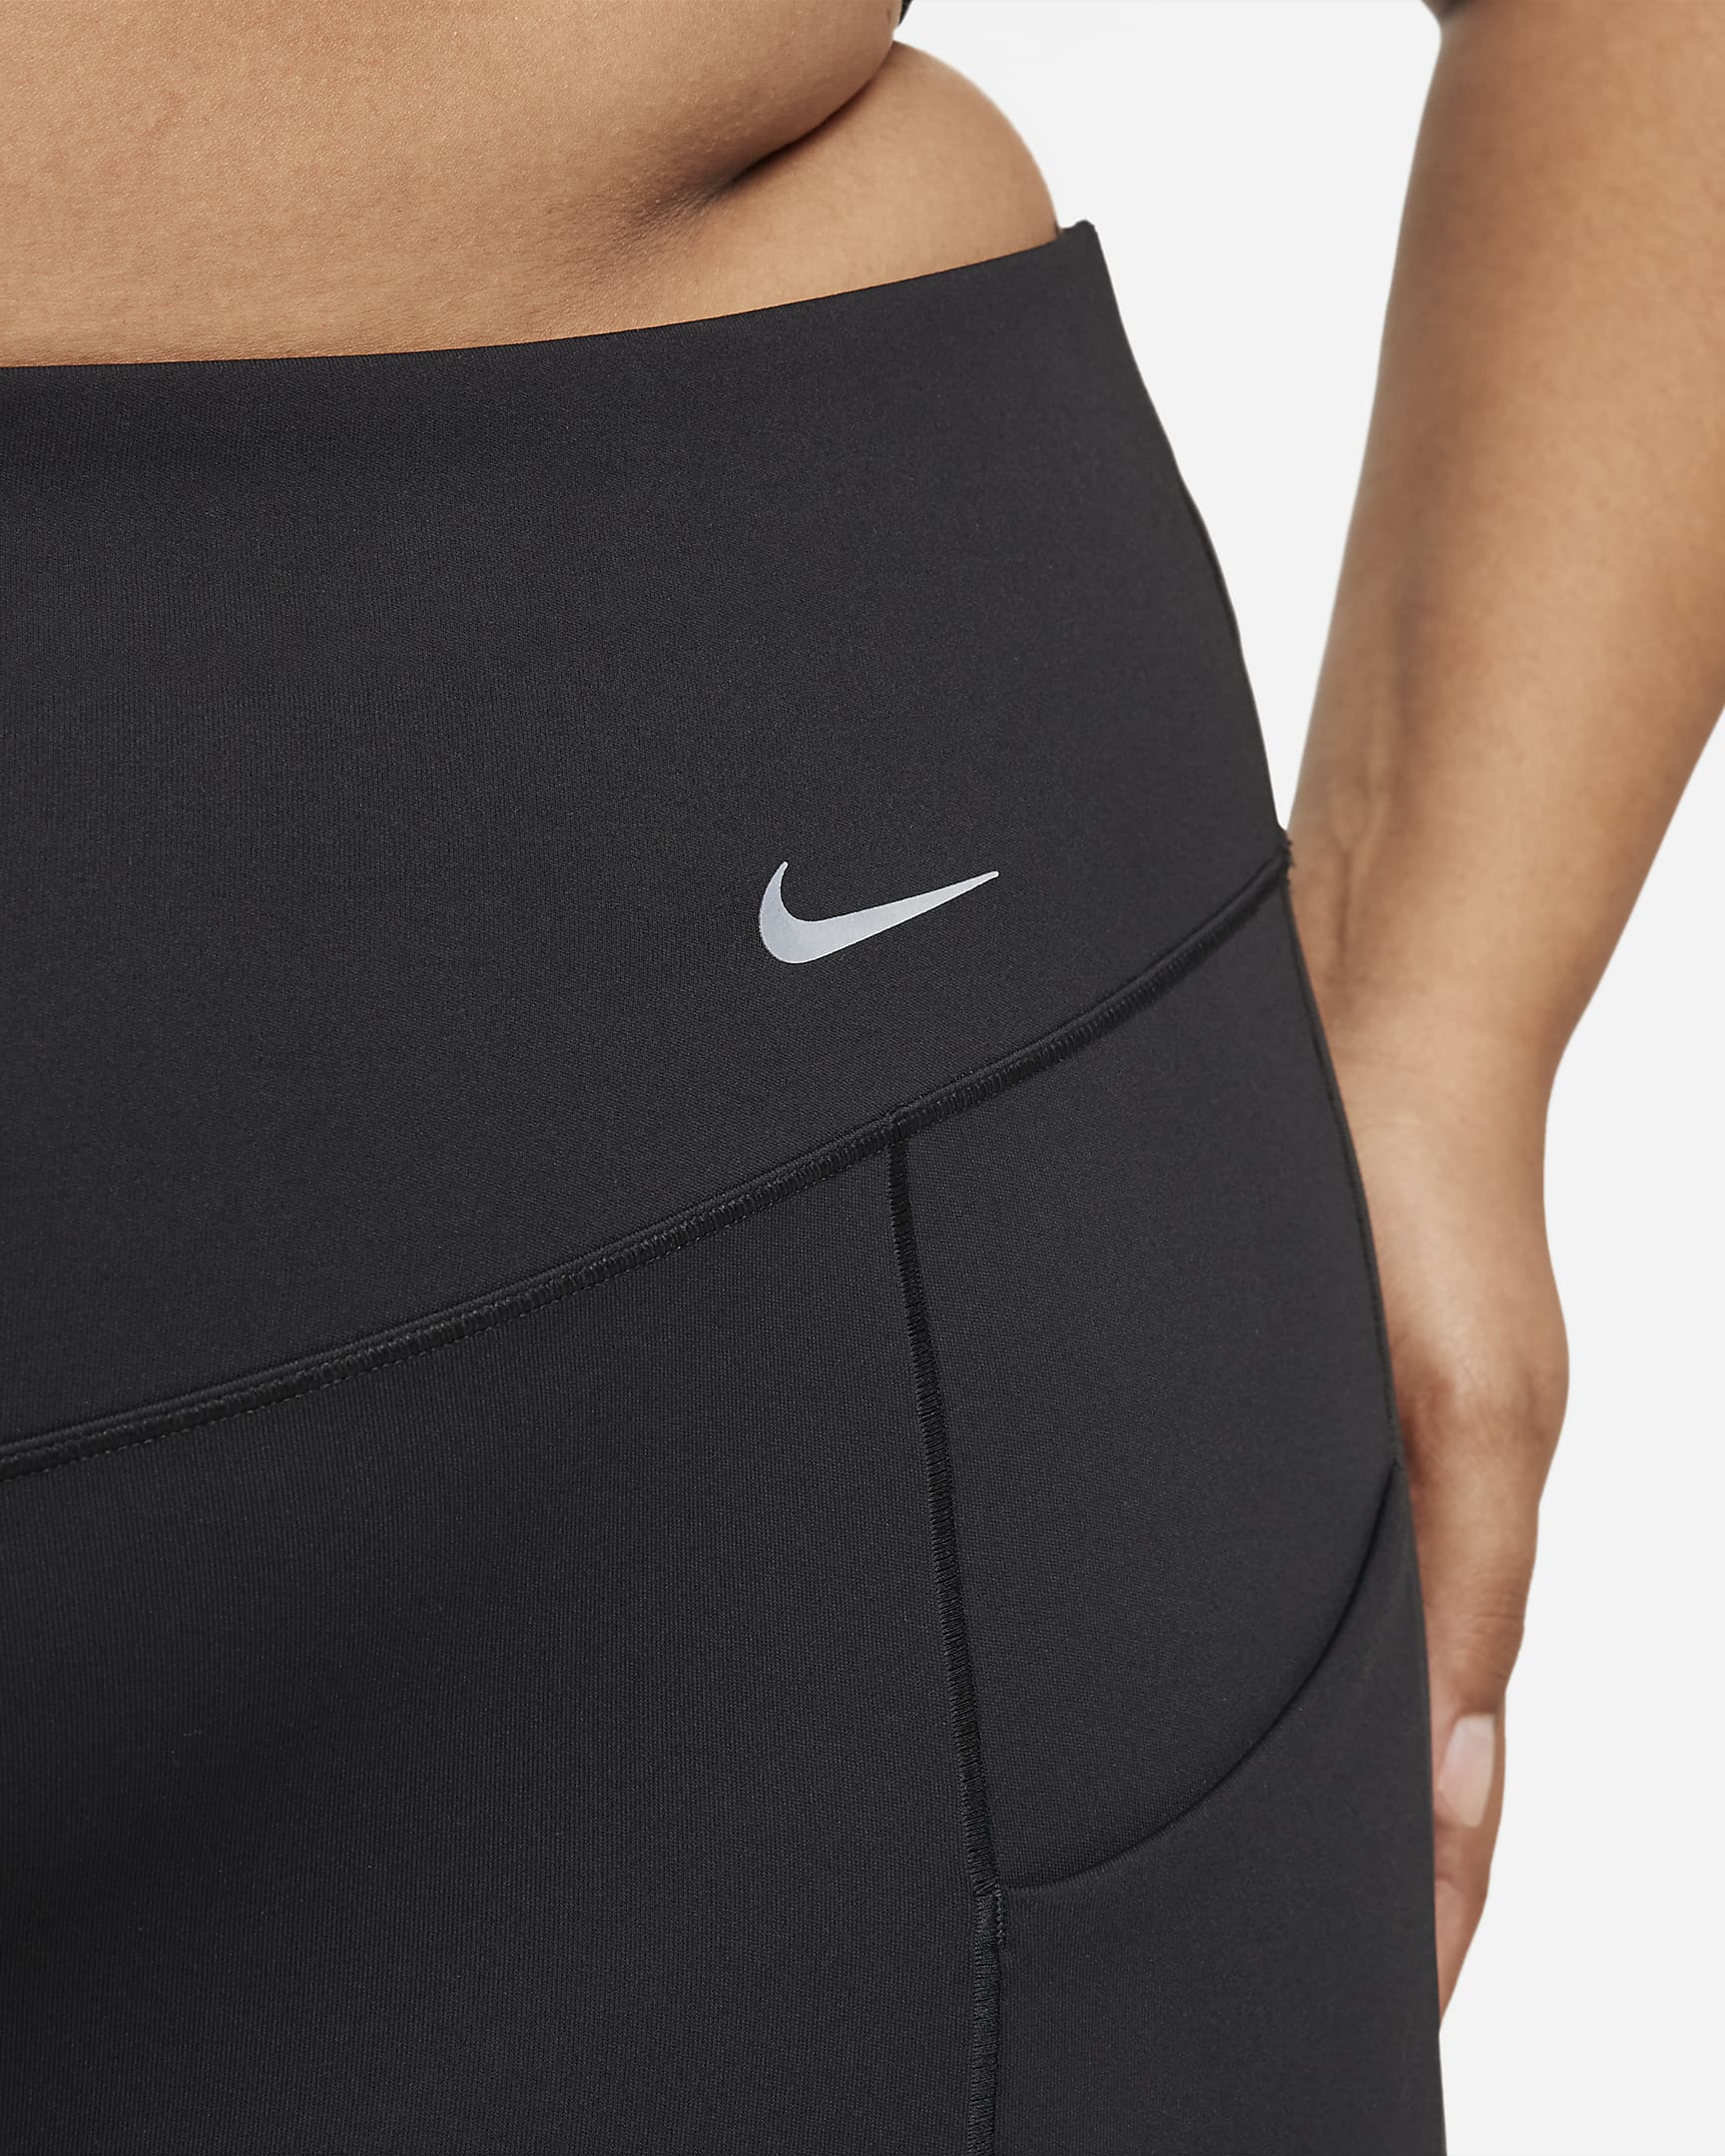 Nike Universa Women's Medium-Support High-Waisted 20cm (approx.) Biker Shorts with Pockets (Plus Size) - Black/Black